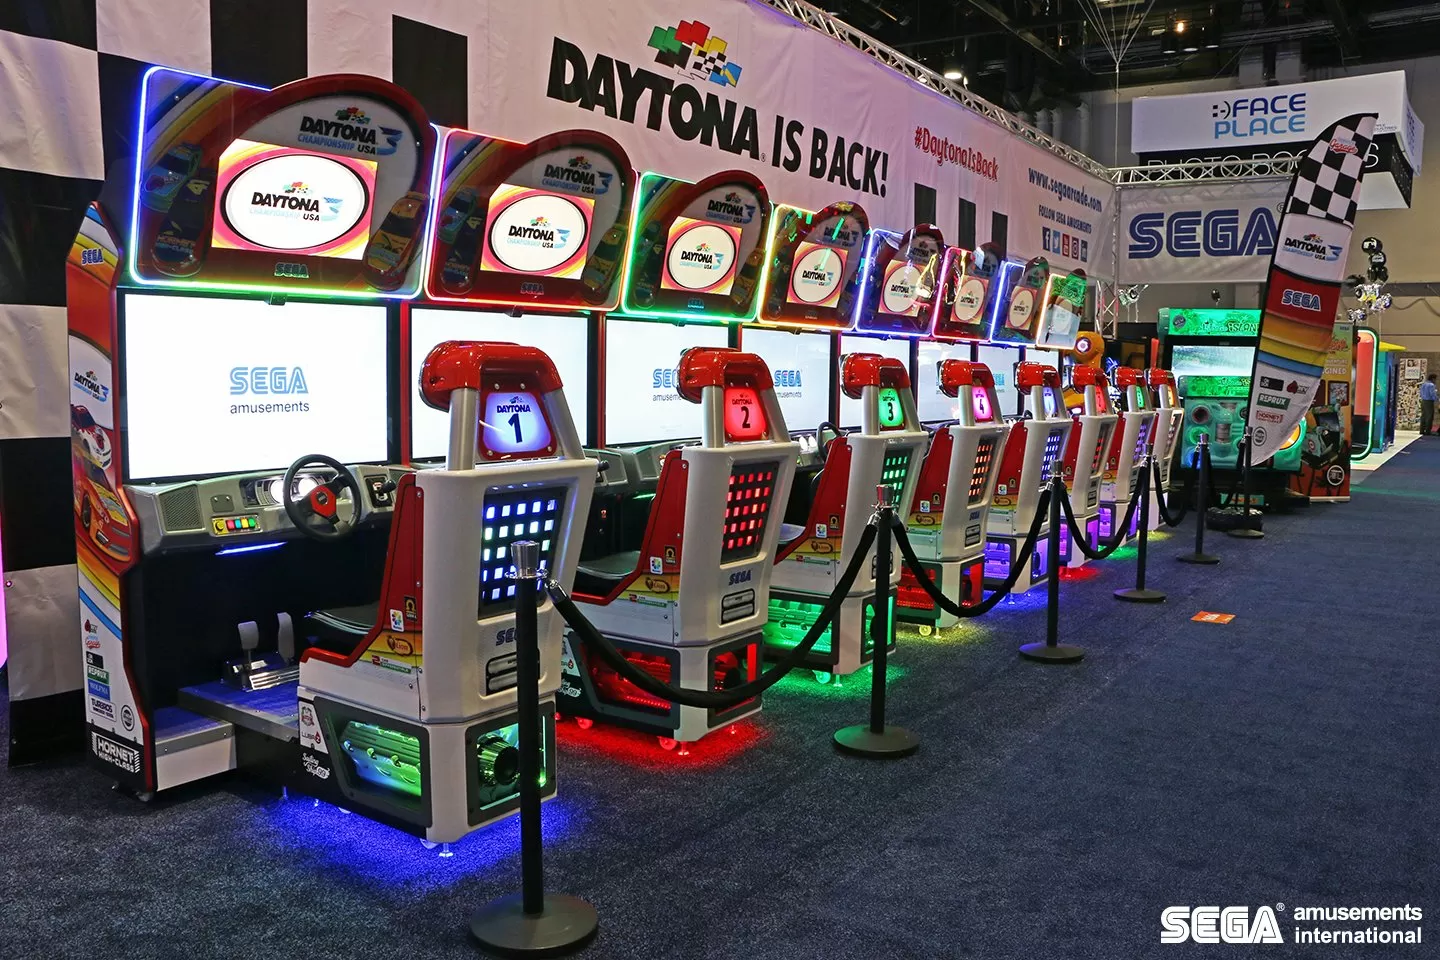 Sega has created a modern version of arcade favorite Daytona USA